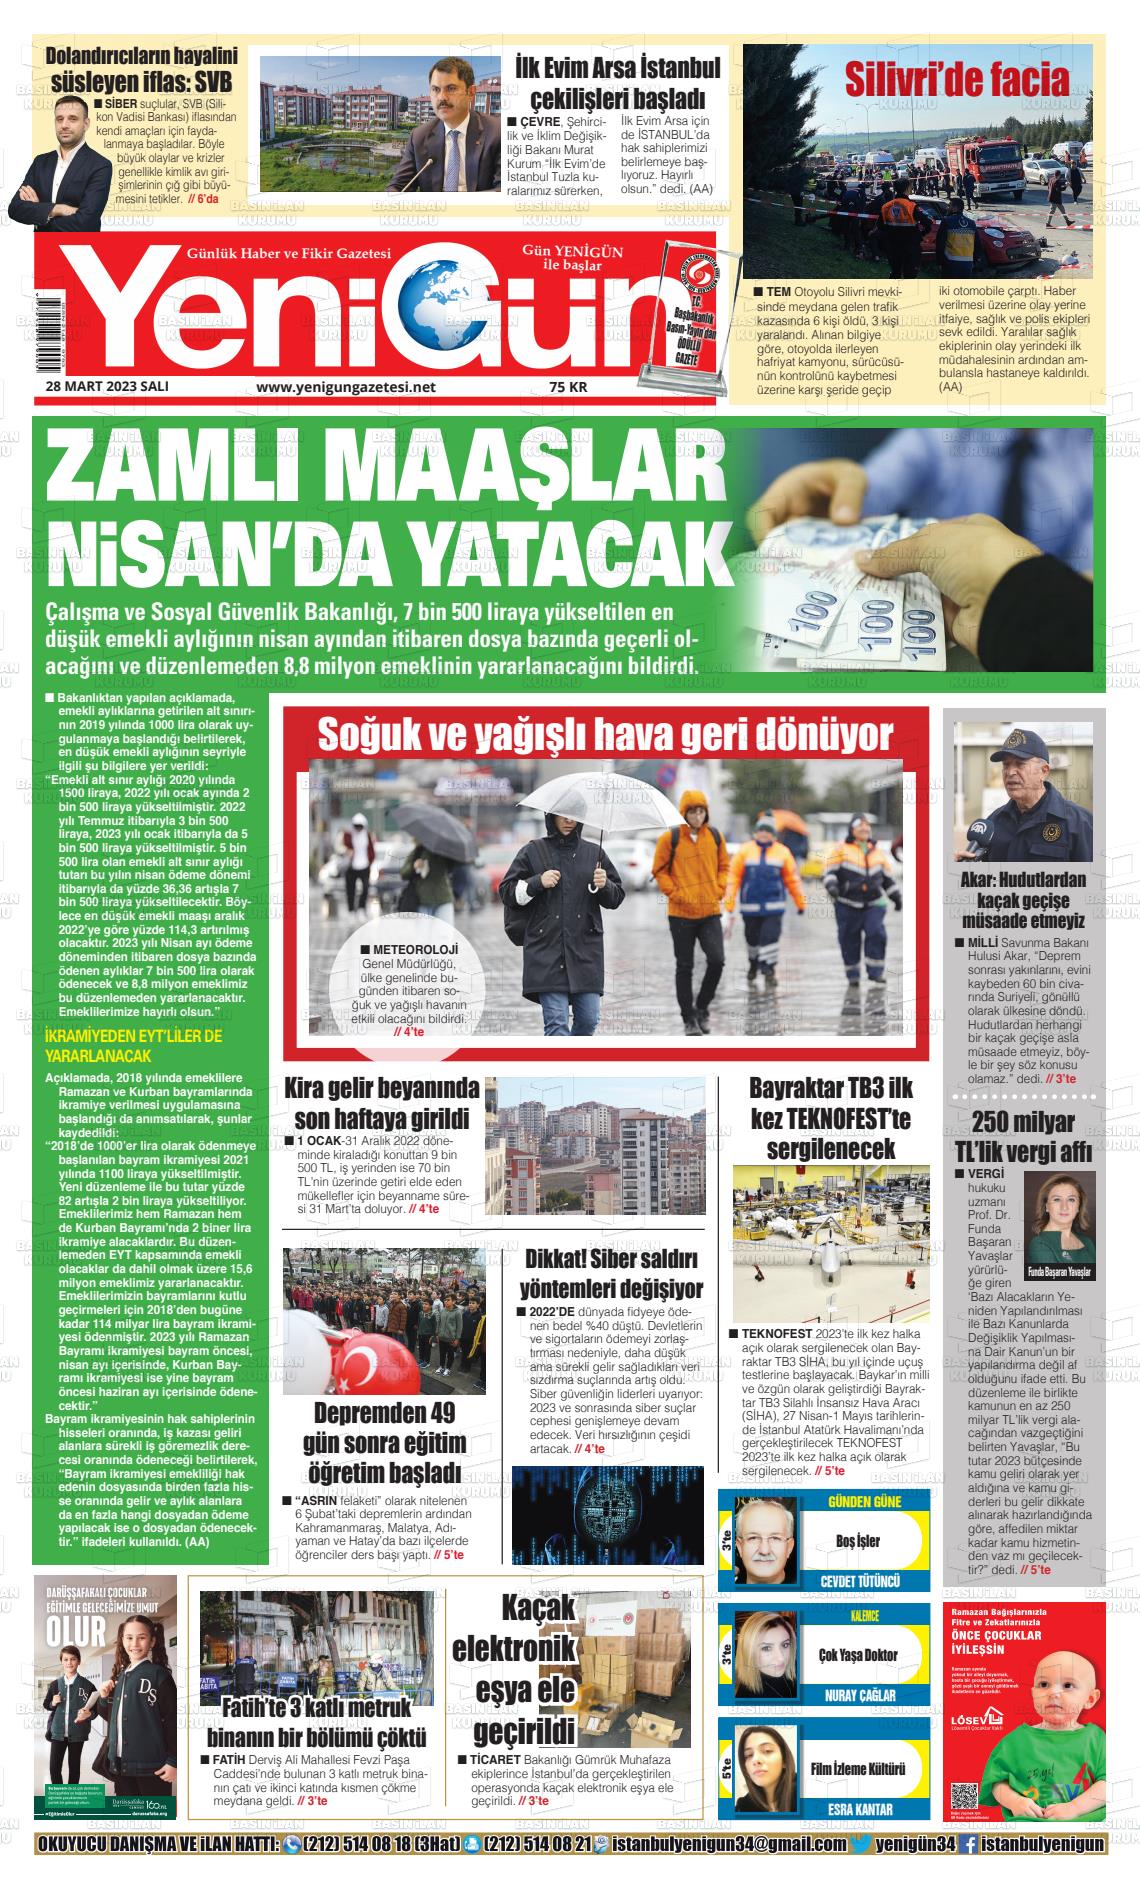 28 Mart 2023 Fatih Yenigün Gazete Manşeti